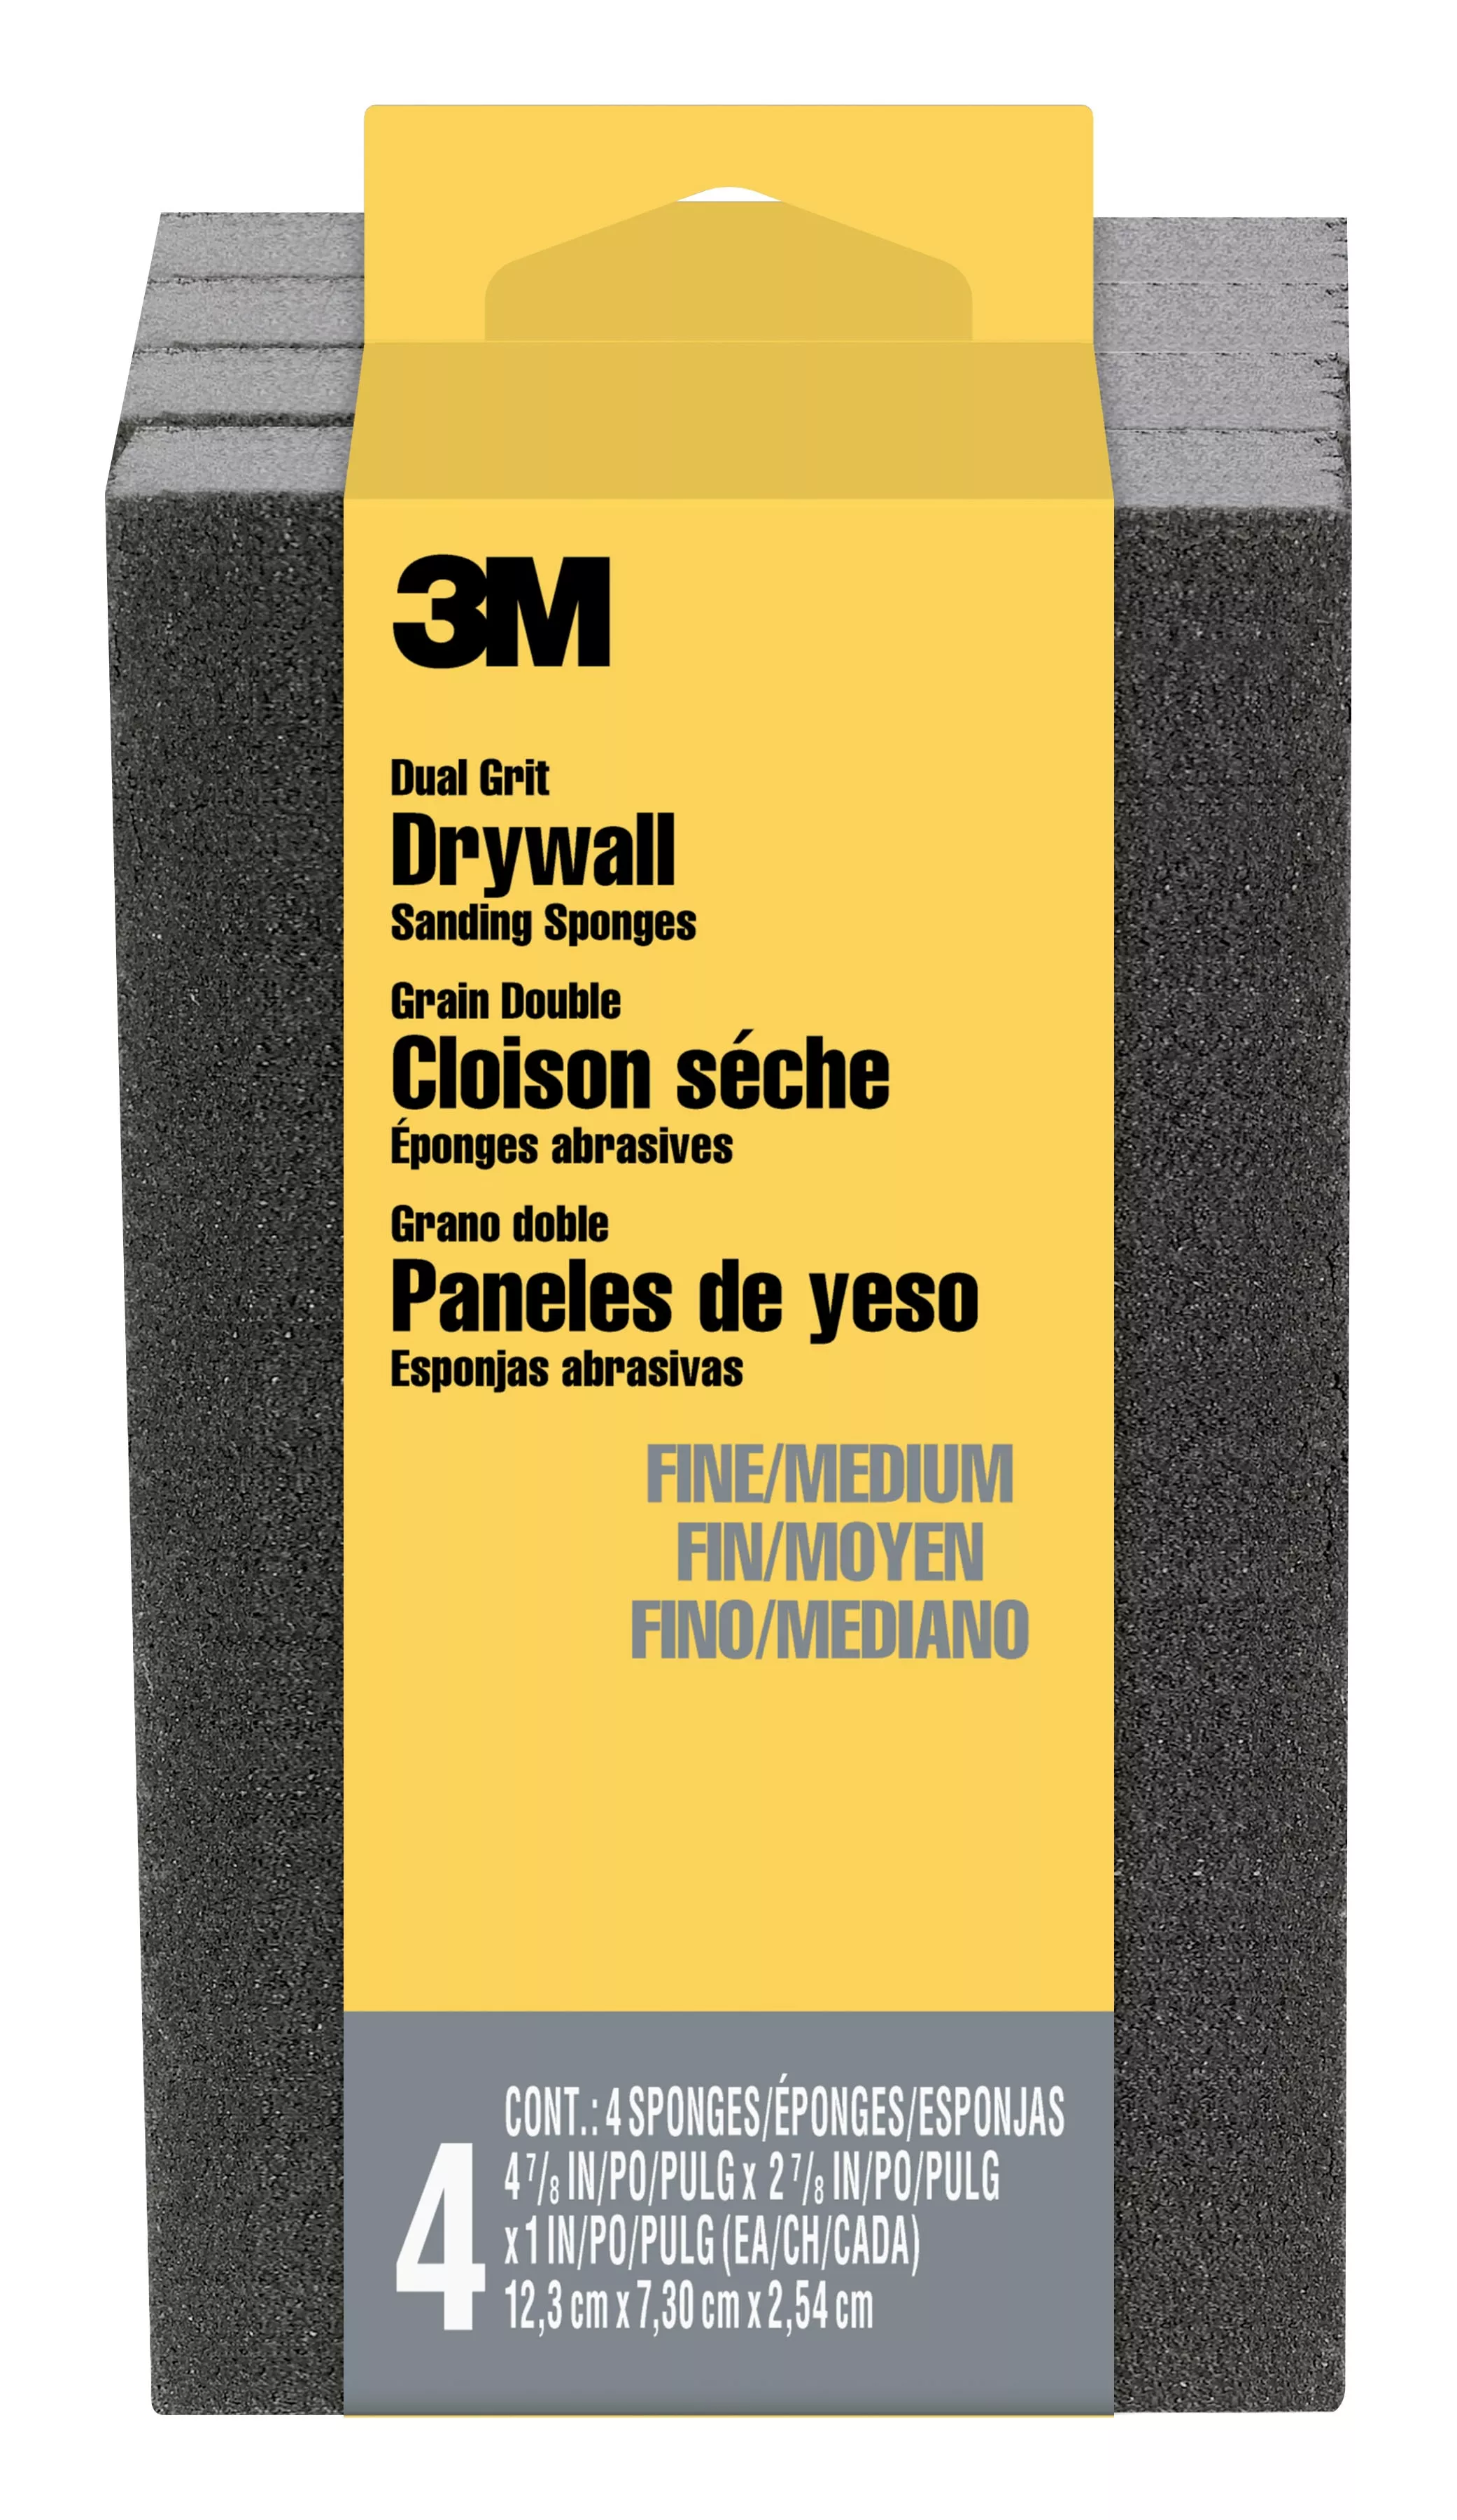 3M™ Drywall Sanding Sponge 9095DC-NA-4PK, Dual Grit Block, 2 7/8 in x 4 7/8 in x 1 in, Fine/Medium, 4/pk, 6 pks/cs